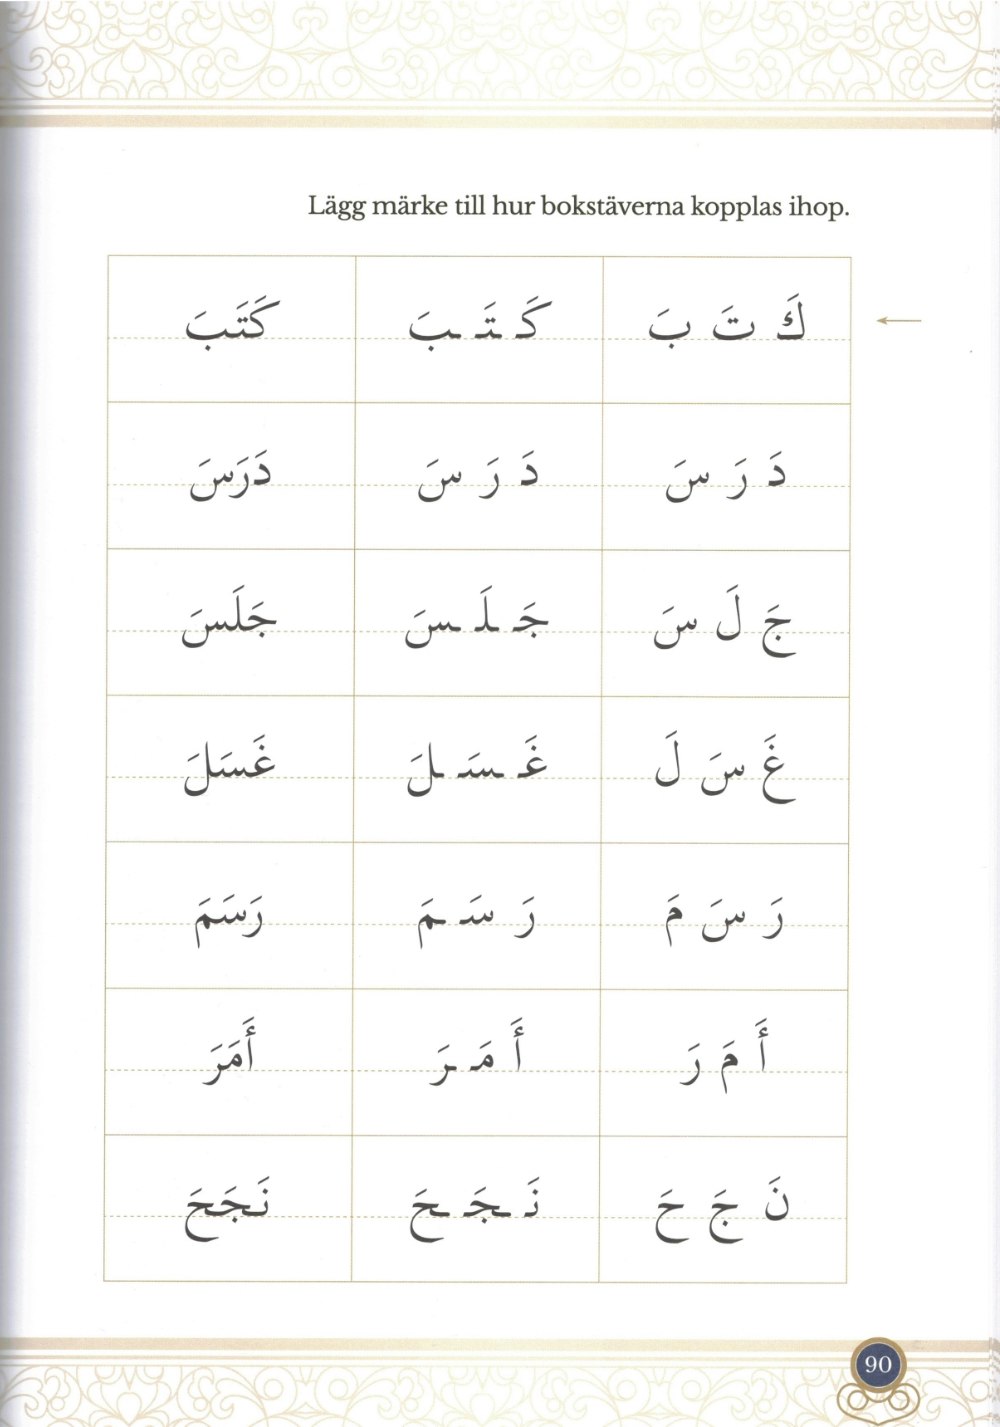 Arabiska Alfabetet Grundnivå